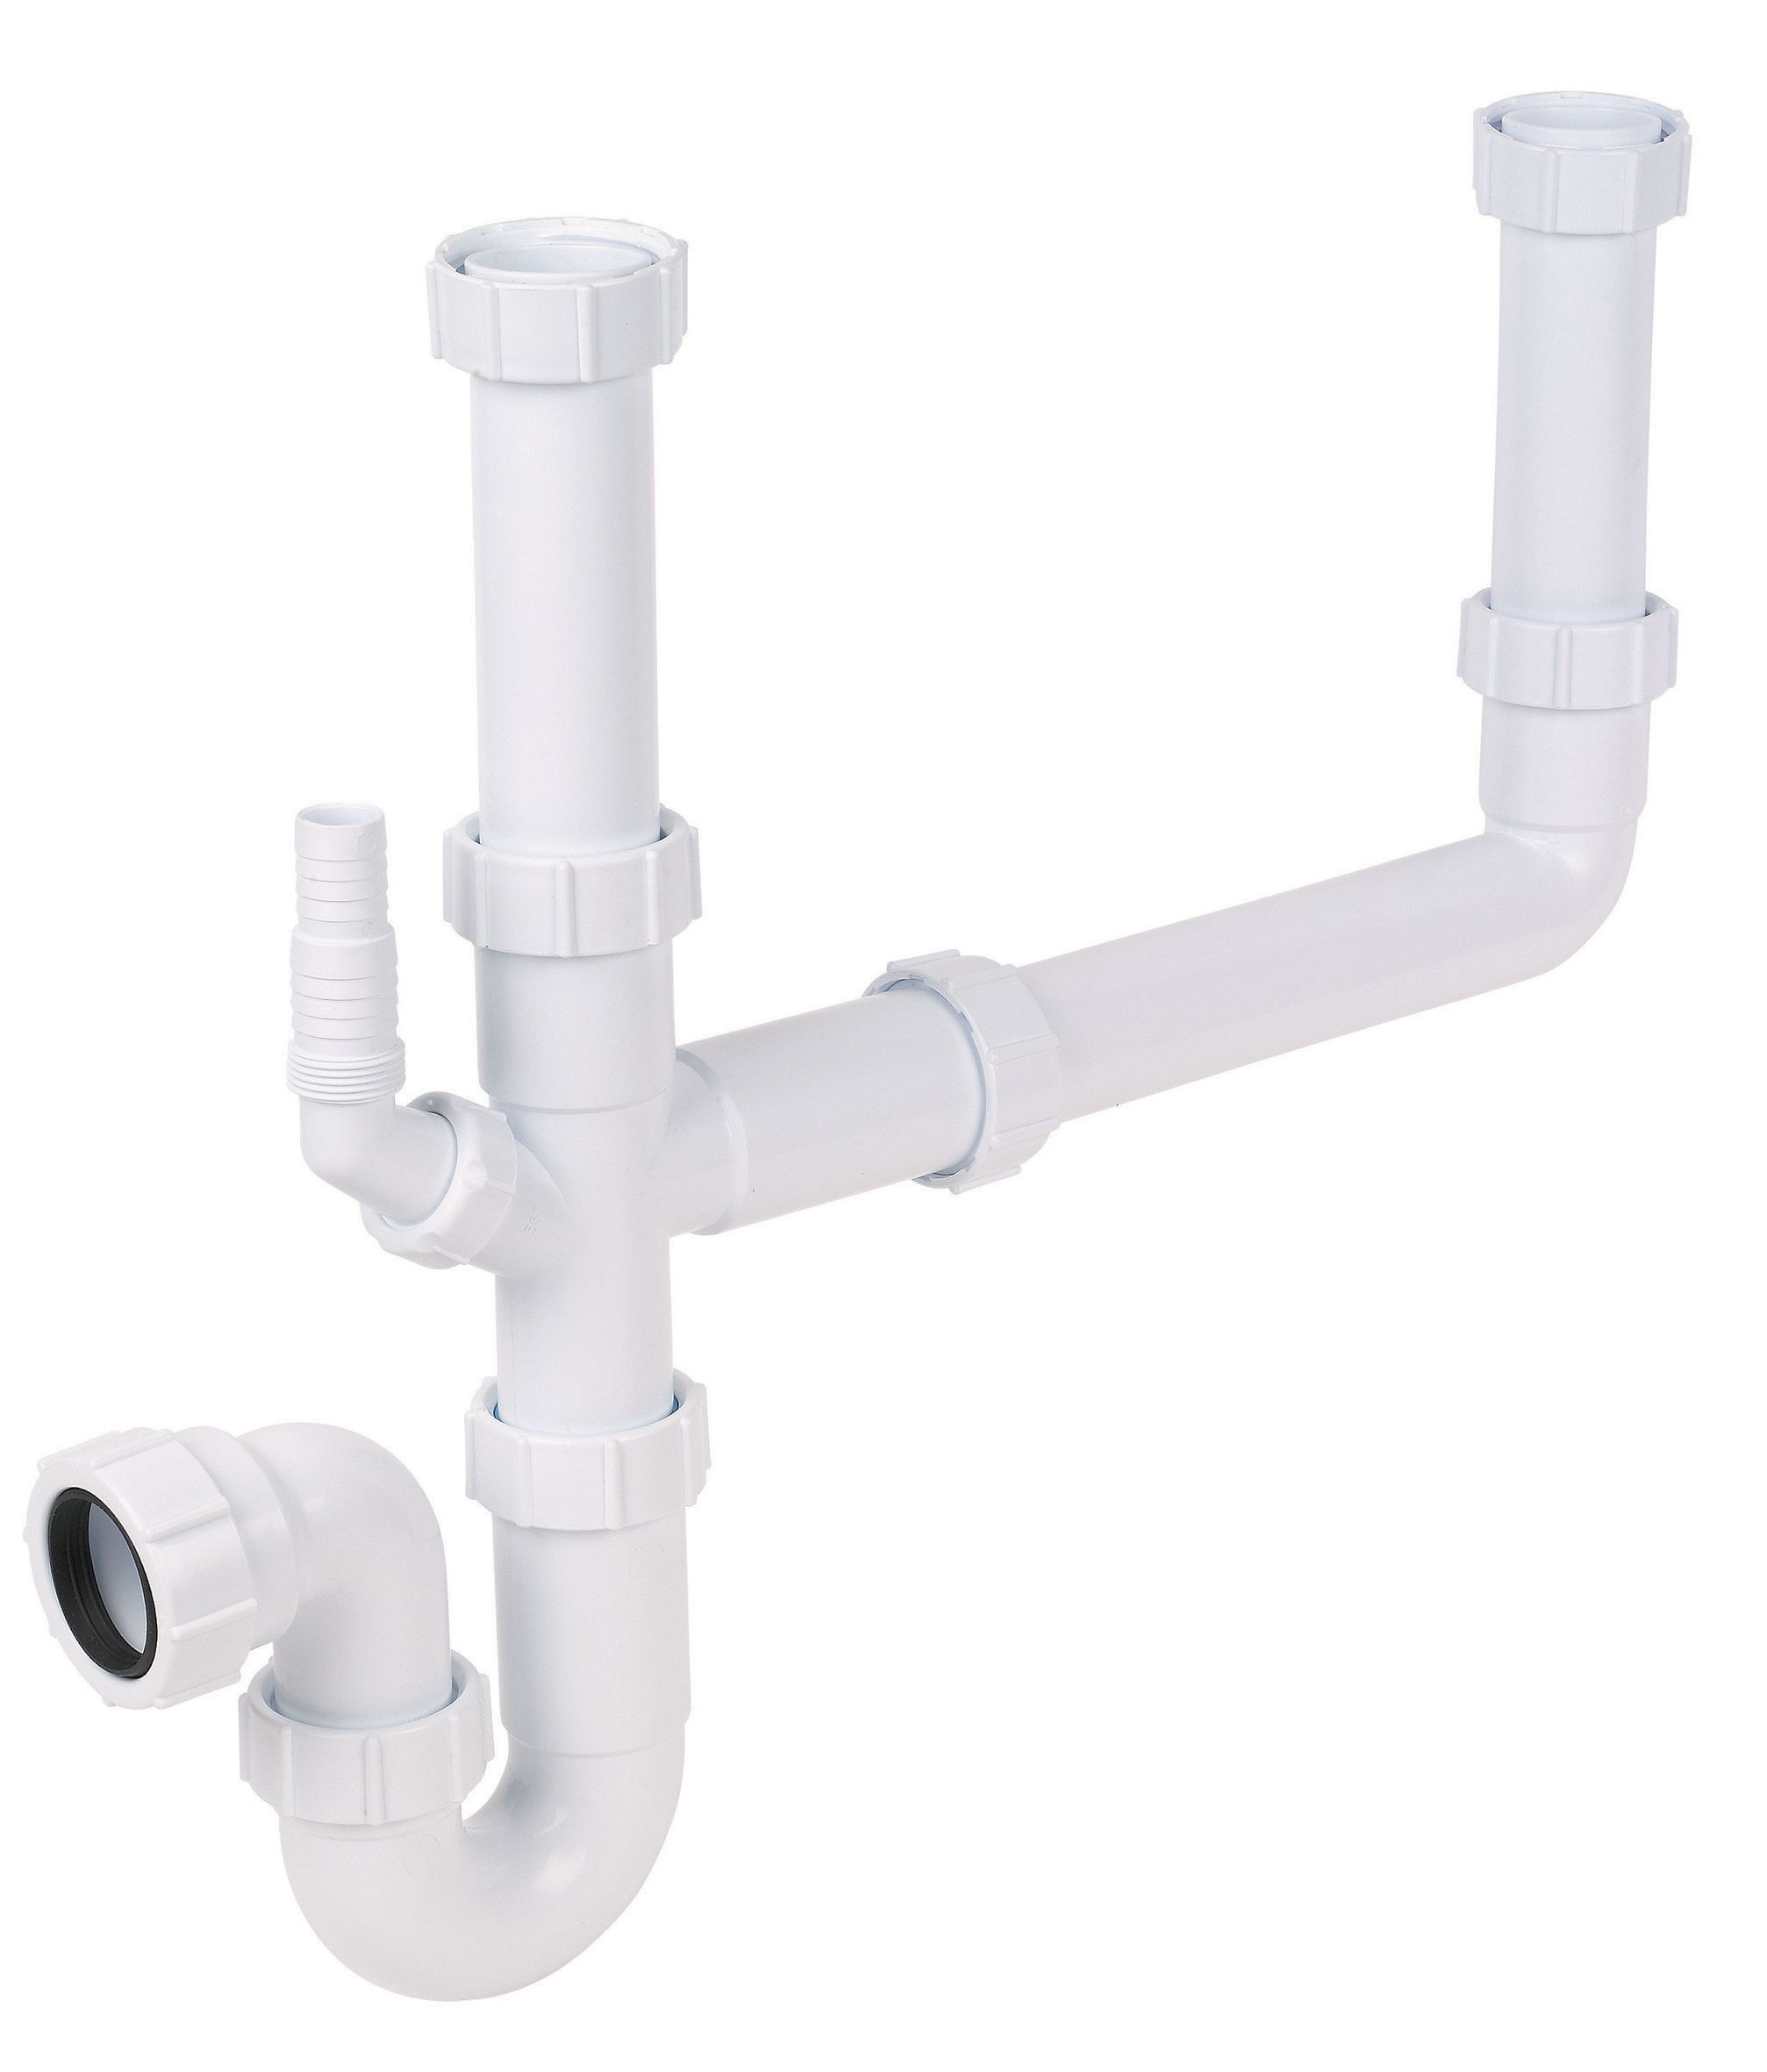 Simple 40mm sink drain filter (EU) by f4r0kh